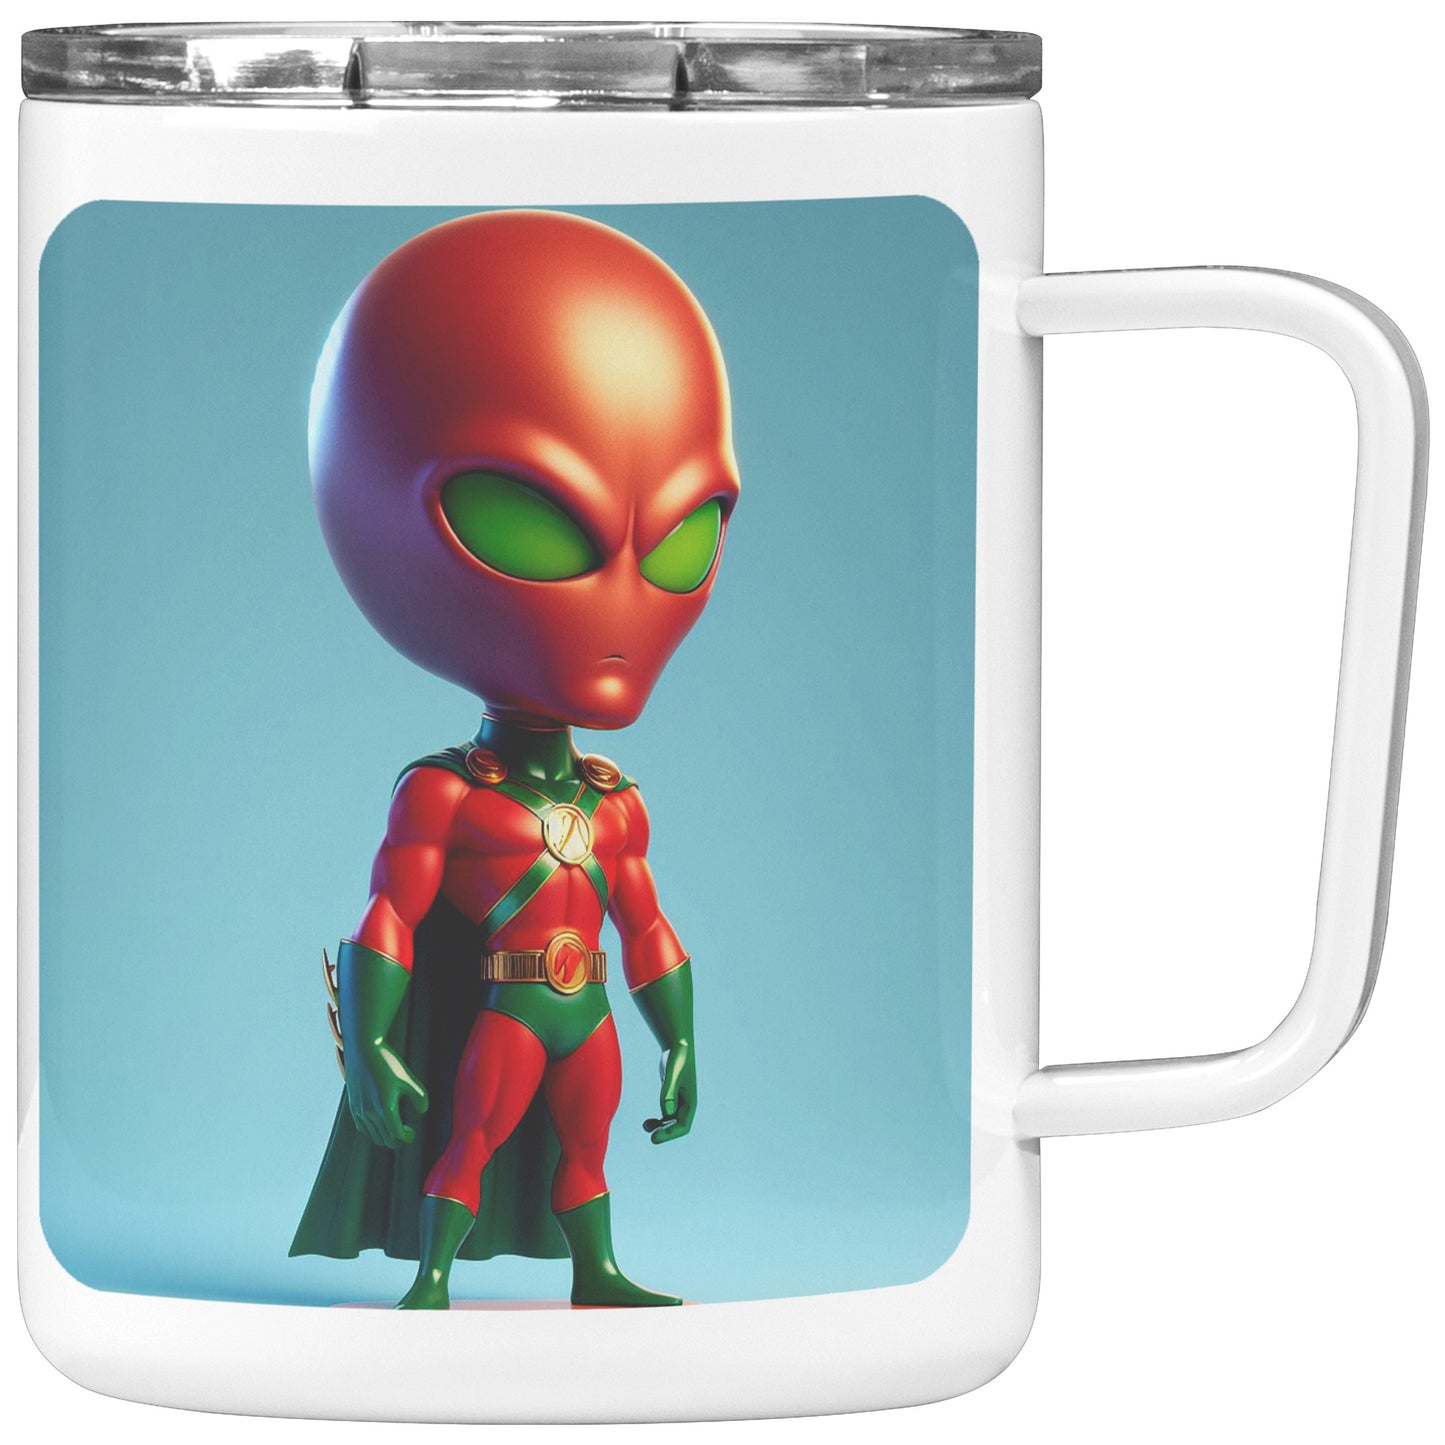 Martian Alien Caricature - Coffee Mug #16